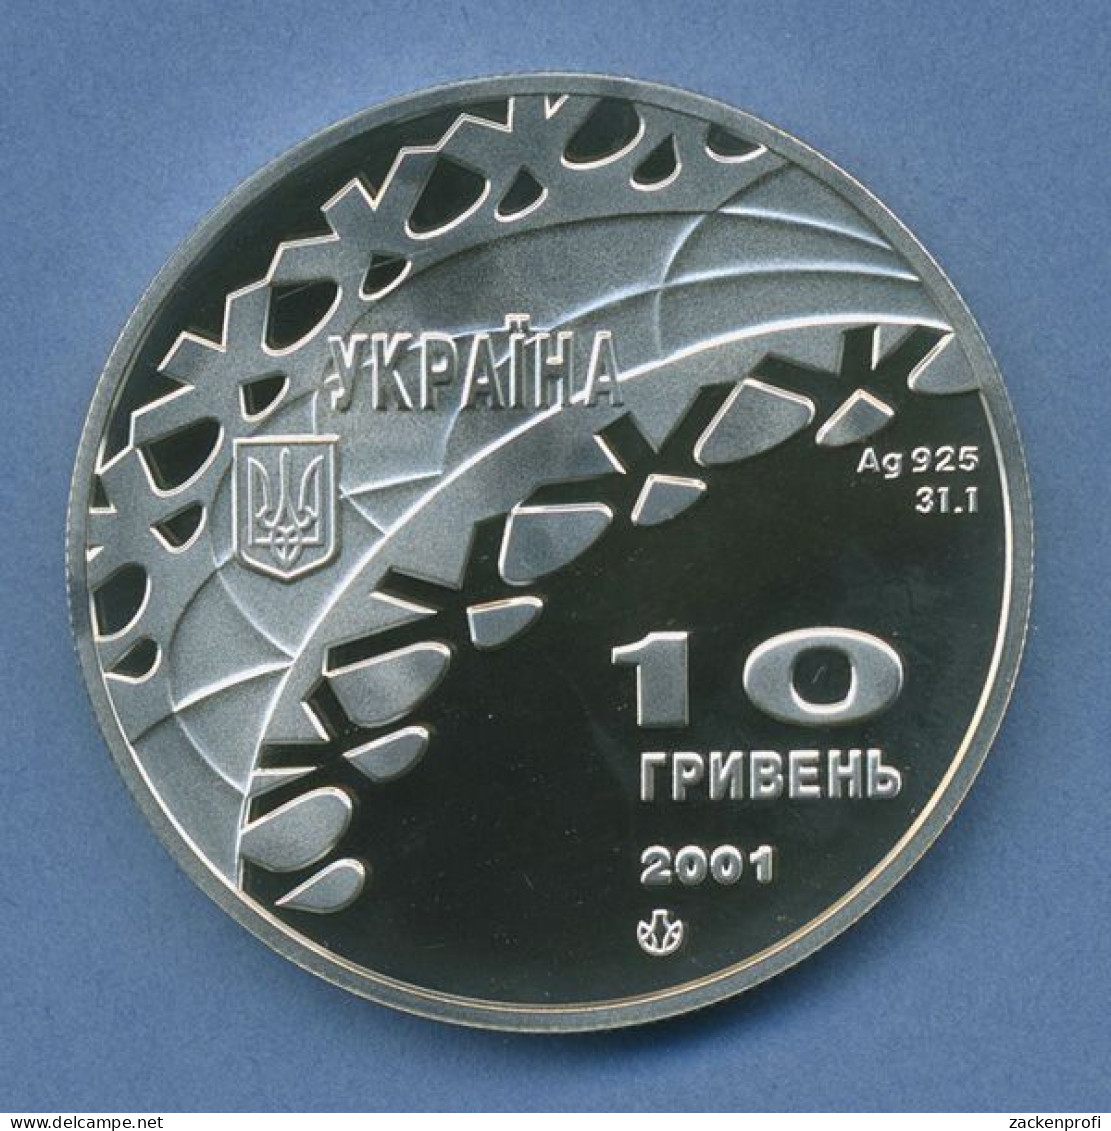 Ukraine 10 Hryven 2001, Silber, Salt Lake City Eishockey KM 165 PP (m4235) - Ukraine